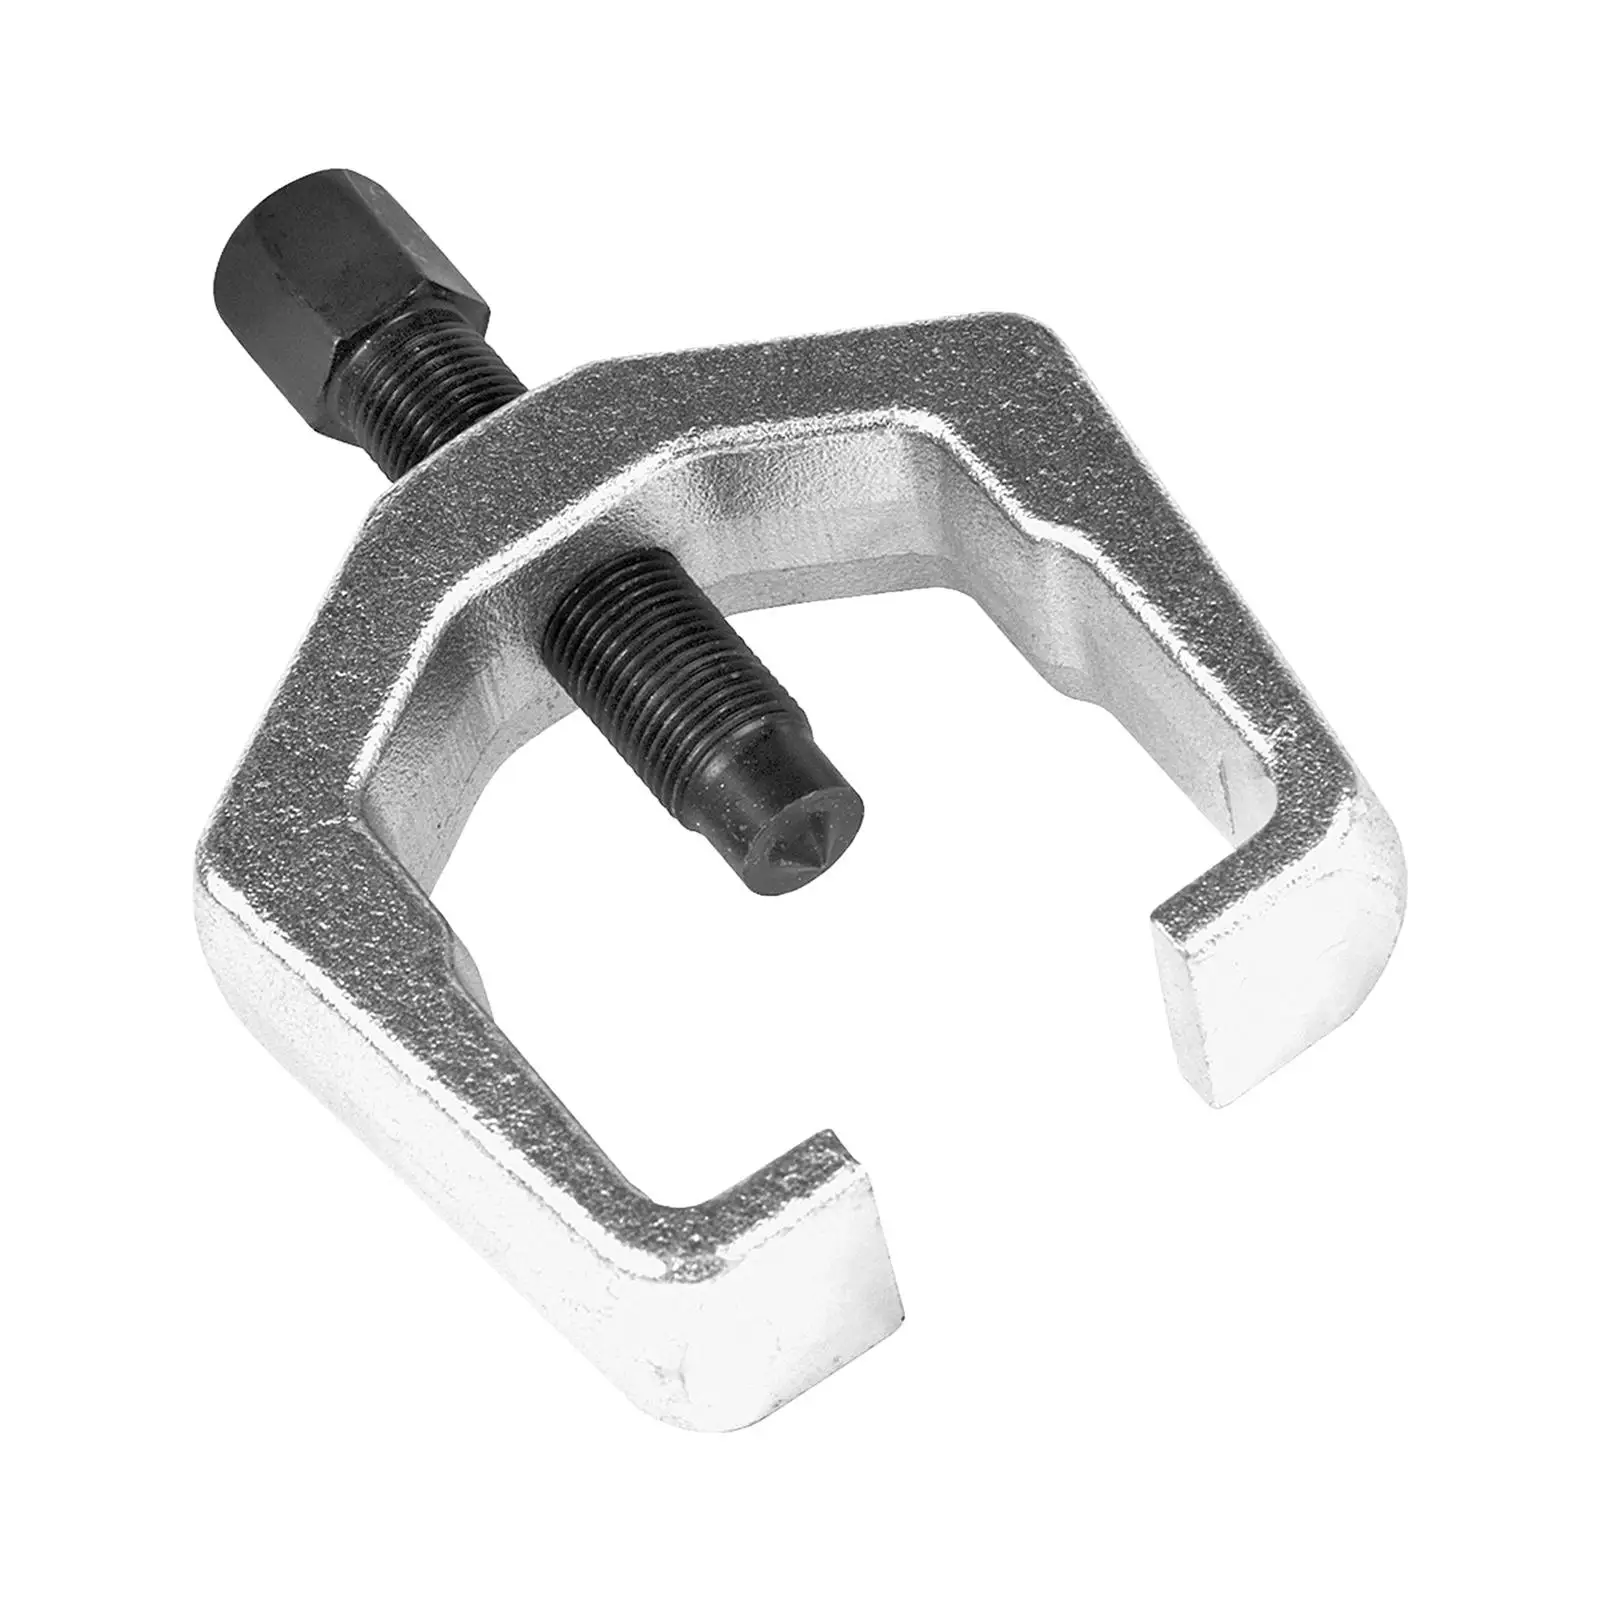 Slack Adjuster Puller Iron Works on Automatic Adjusters Durable